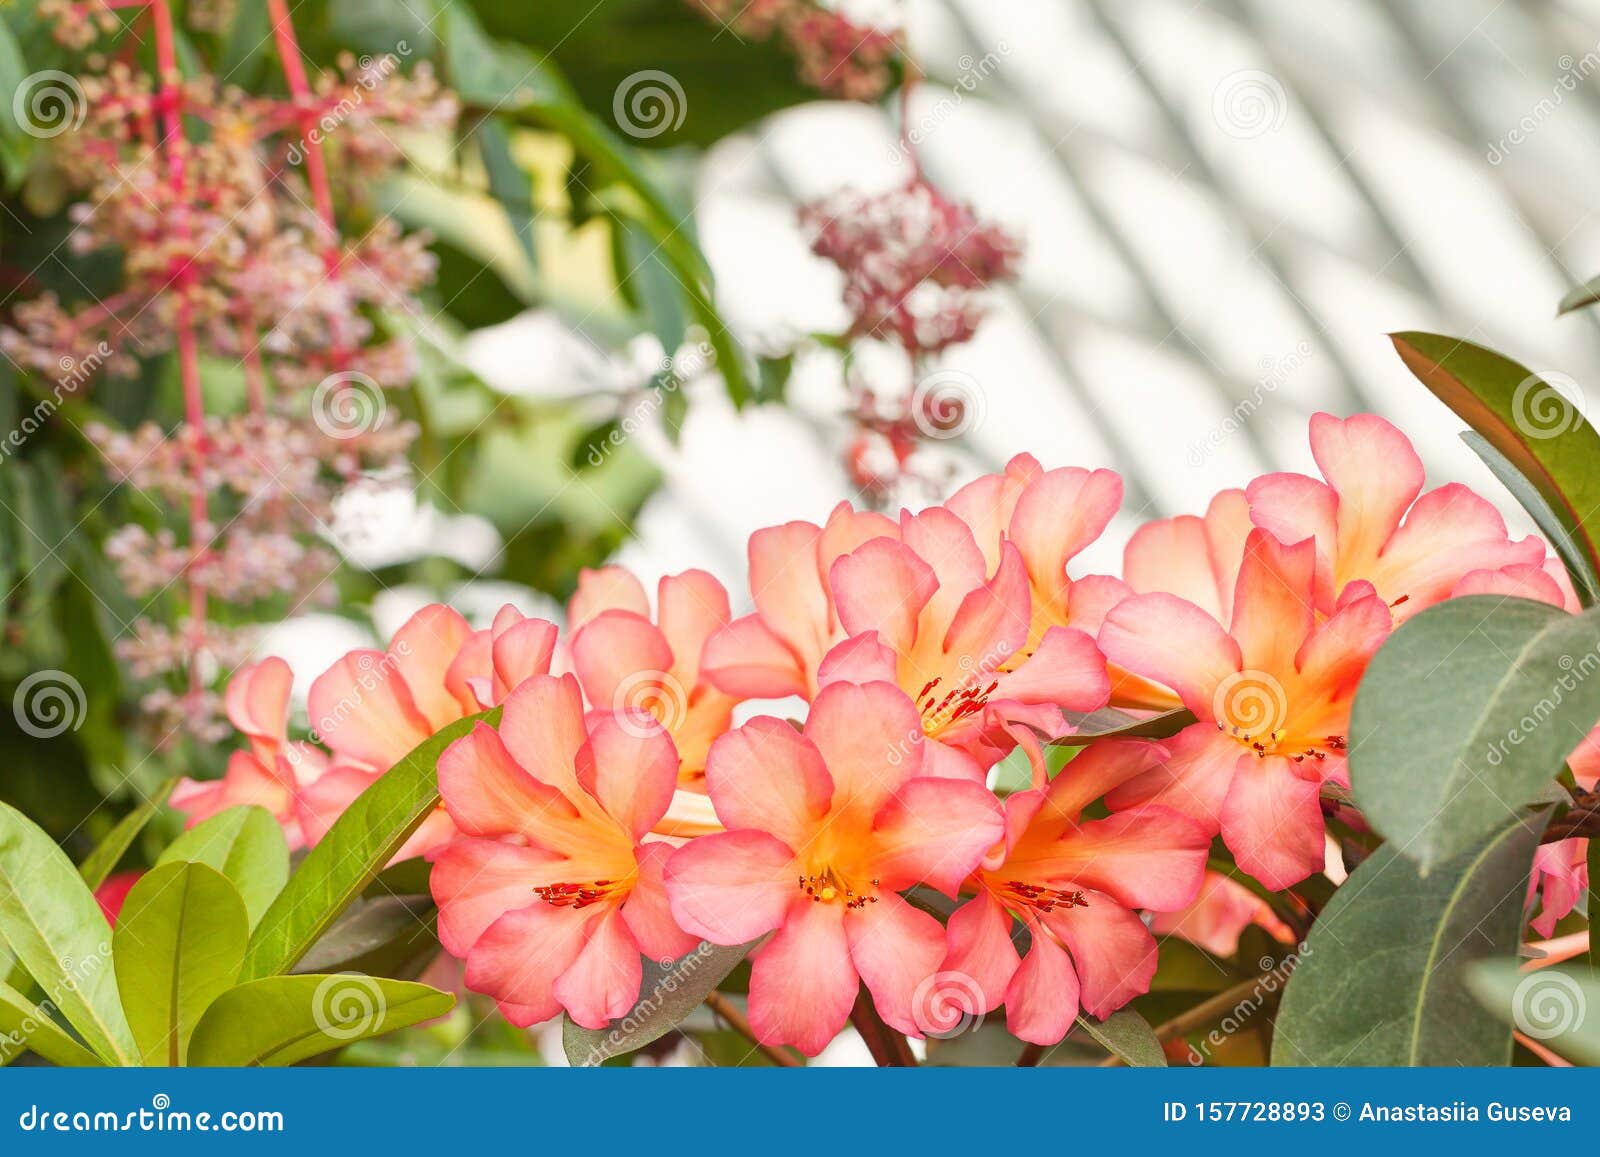 bouquet of hawaiian tropical pink flowers plumeria